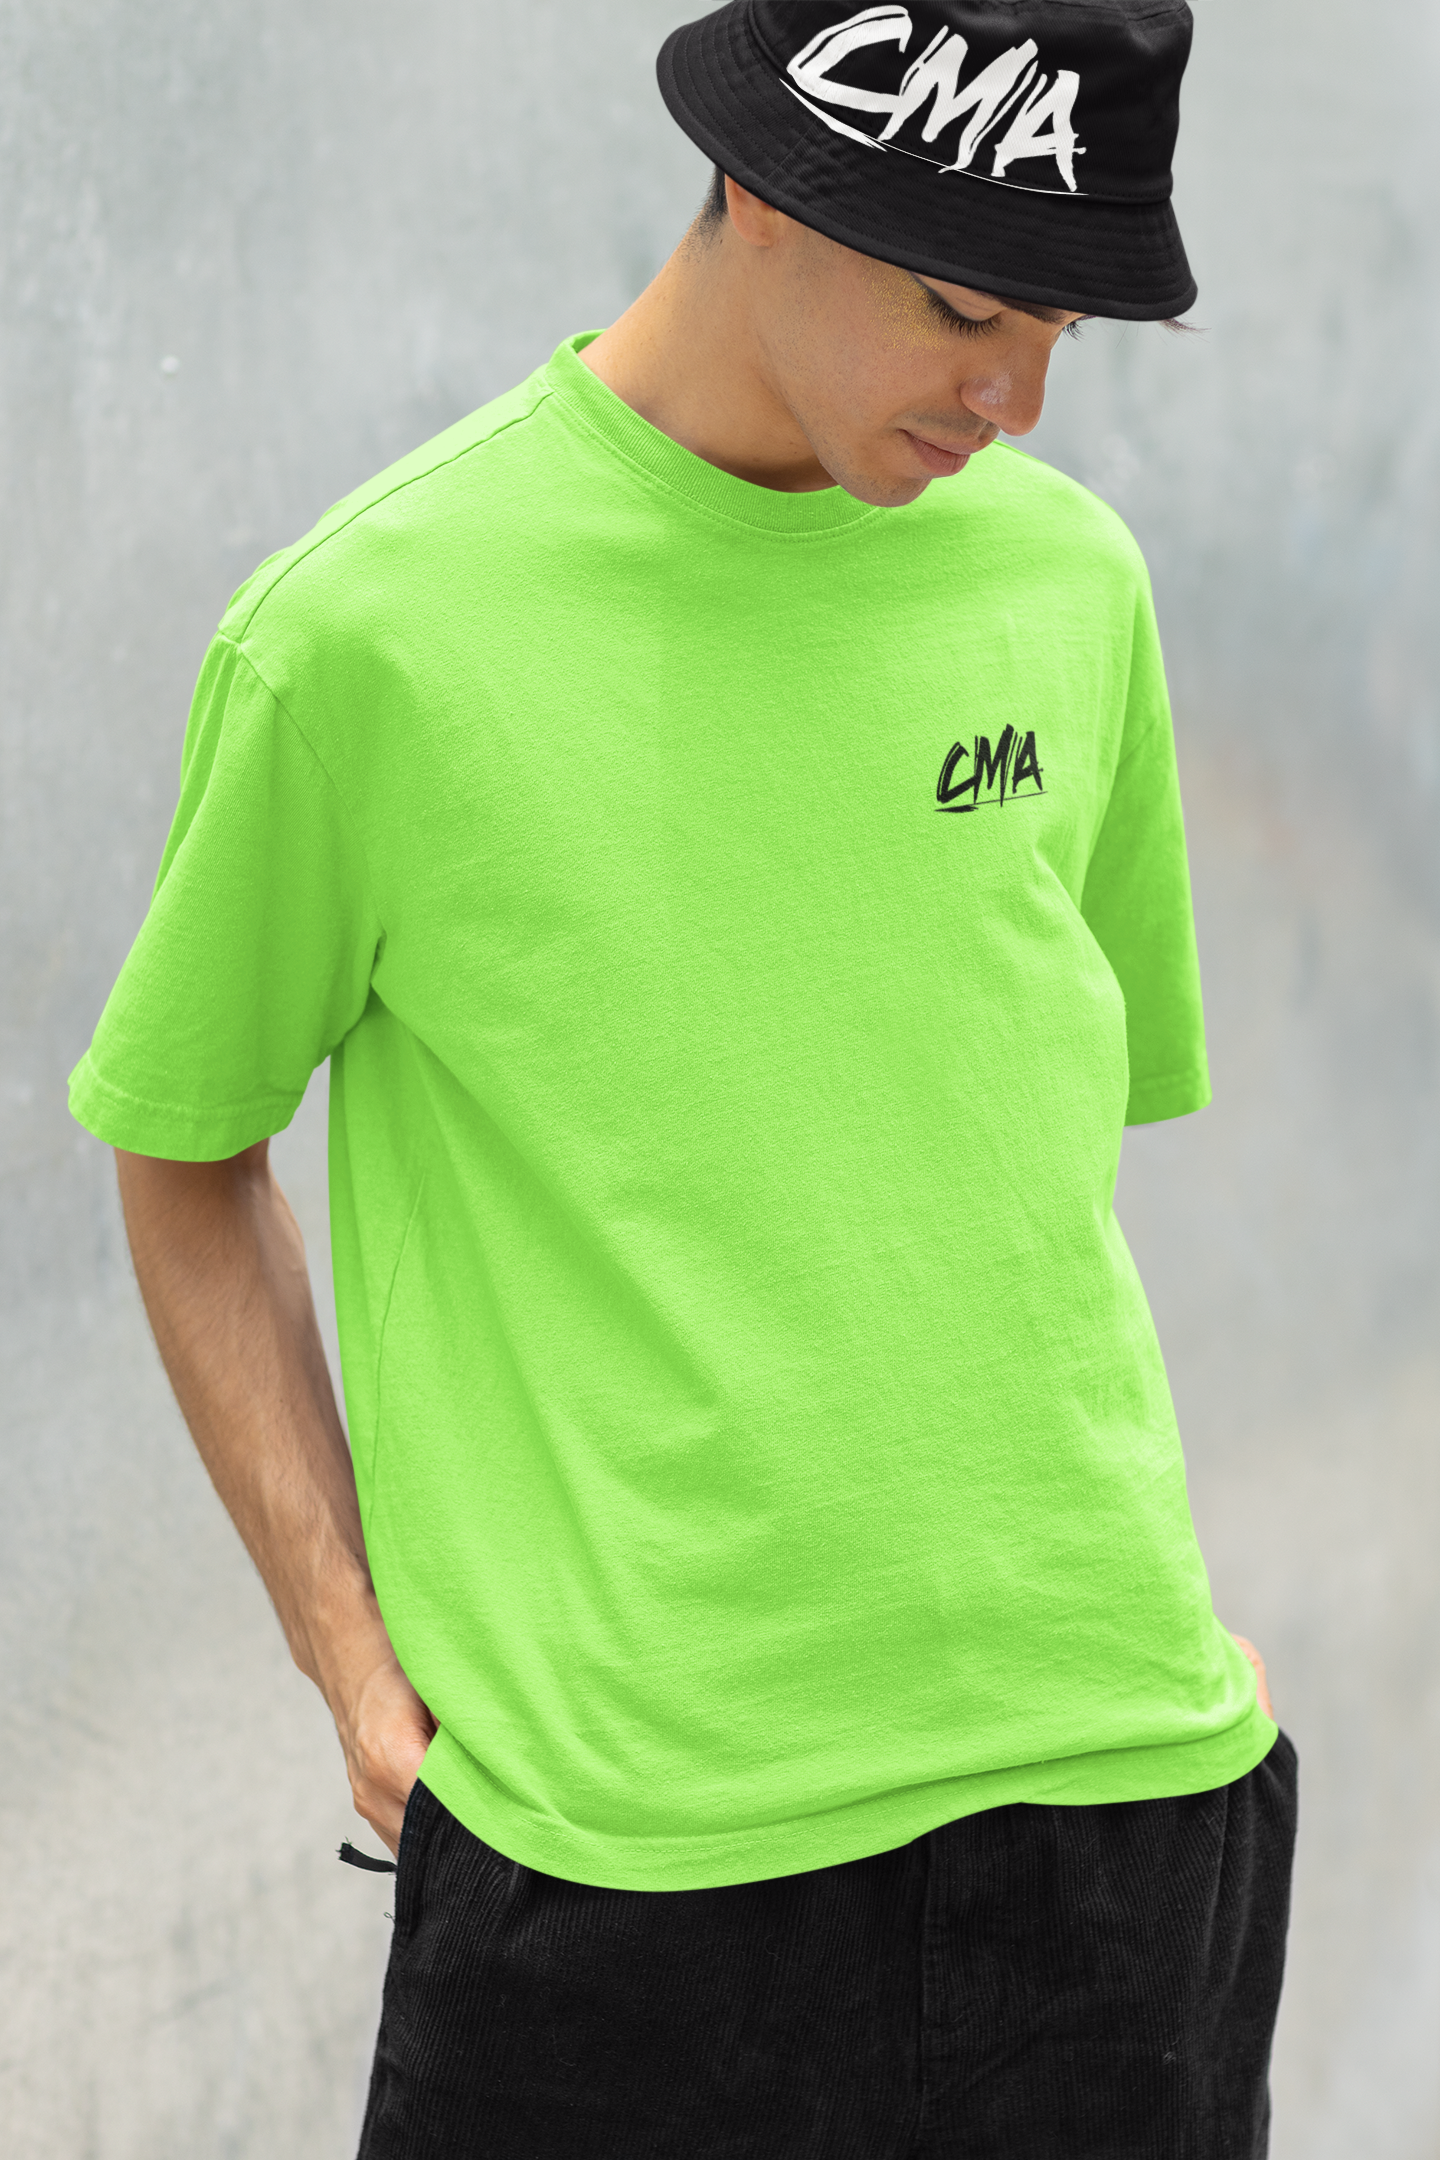 CMA Neon T-shirt